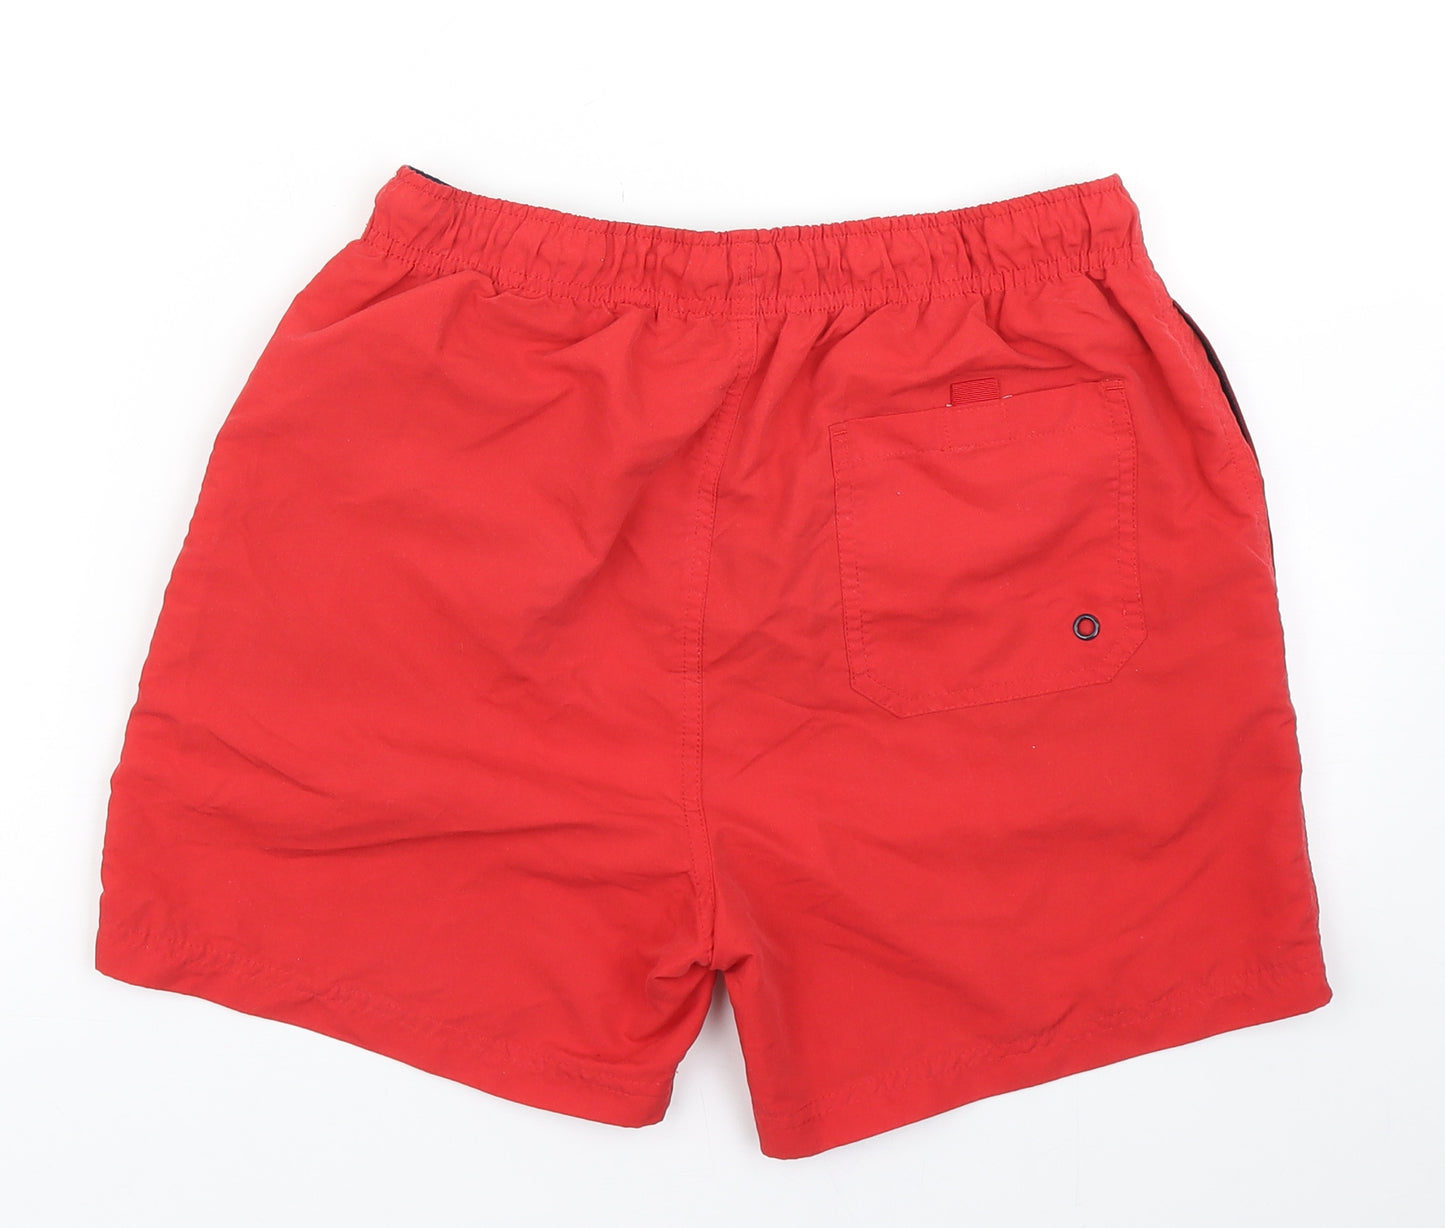 Primark Mens Red  Polyester Athletic Shorts Size S  Regular Drawstring